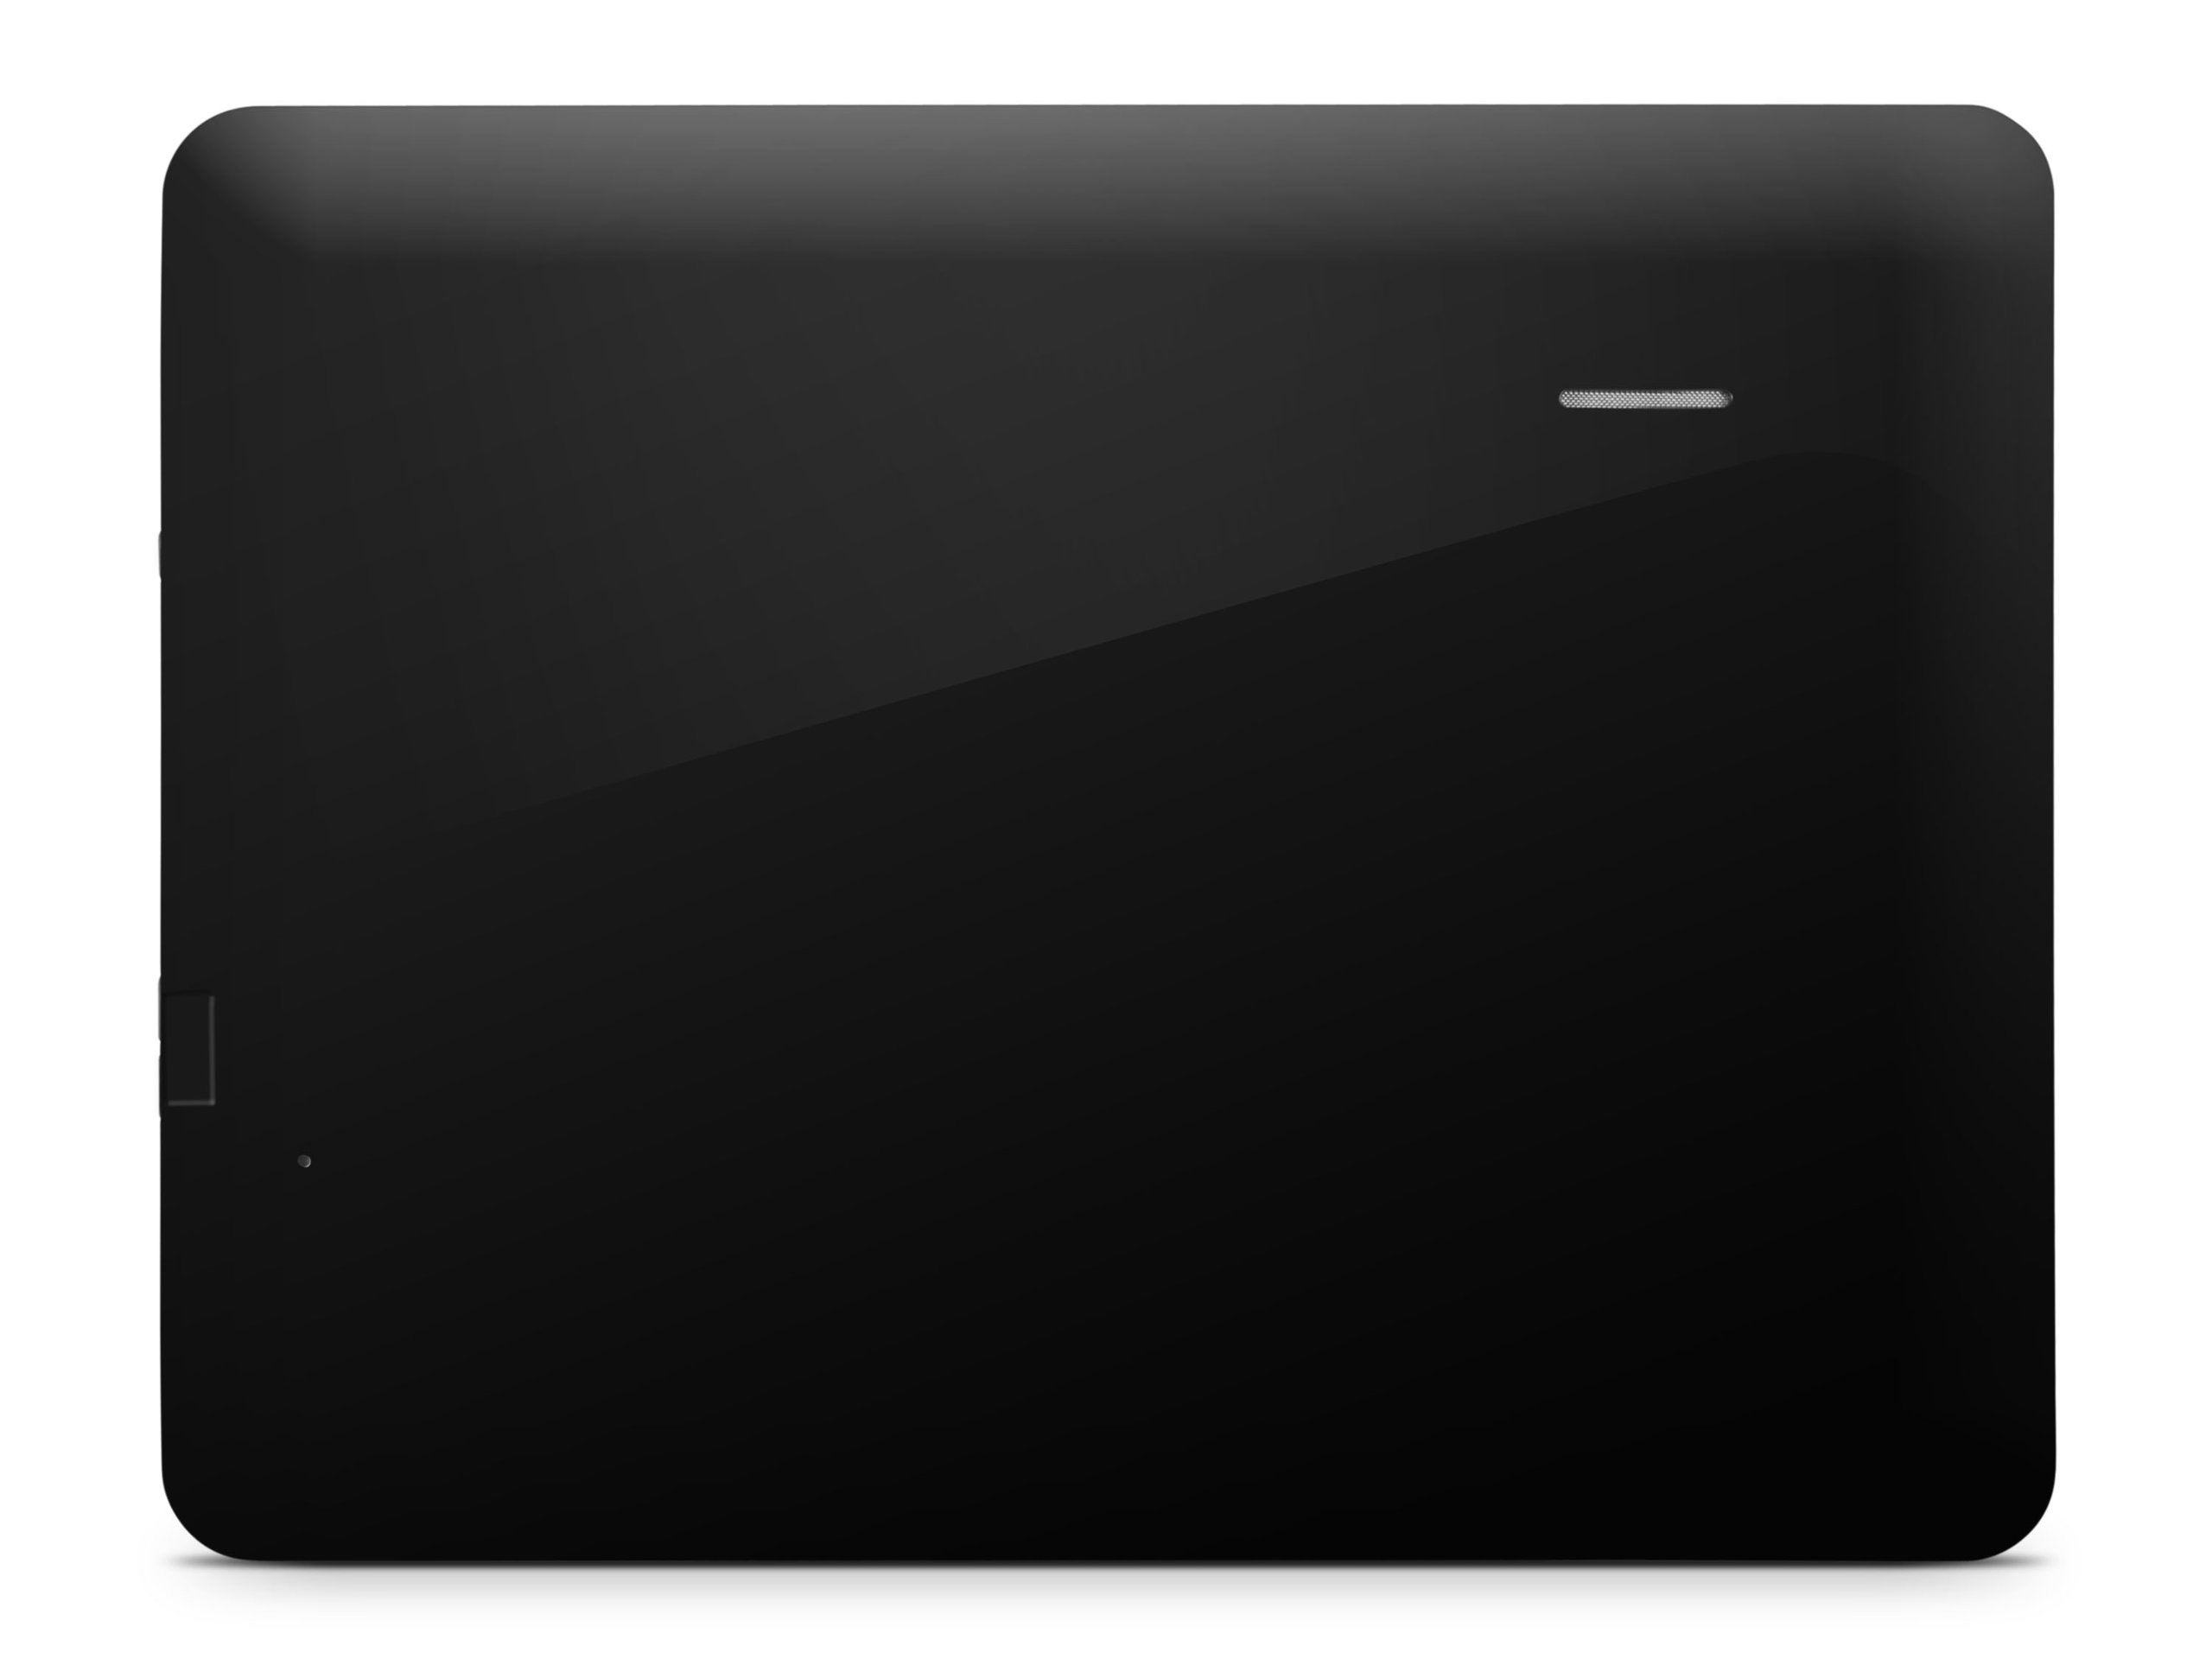 Ematic Genesis Prime EGS108BL 8-Inch 4 GB Tablet (Black)